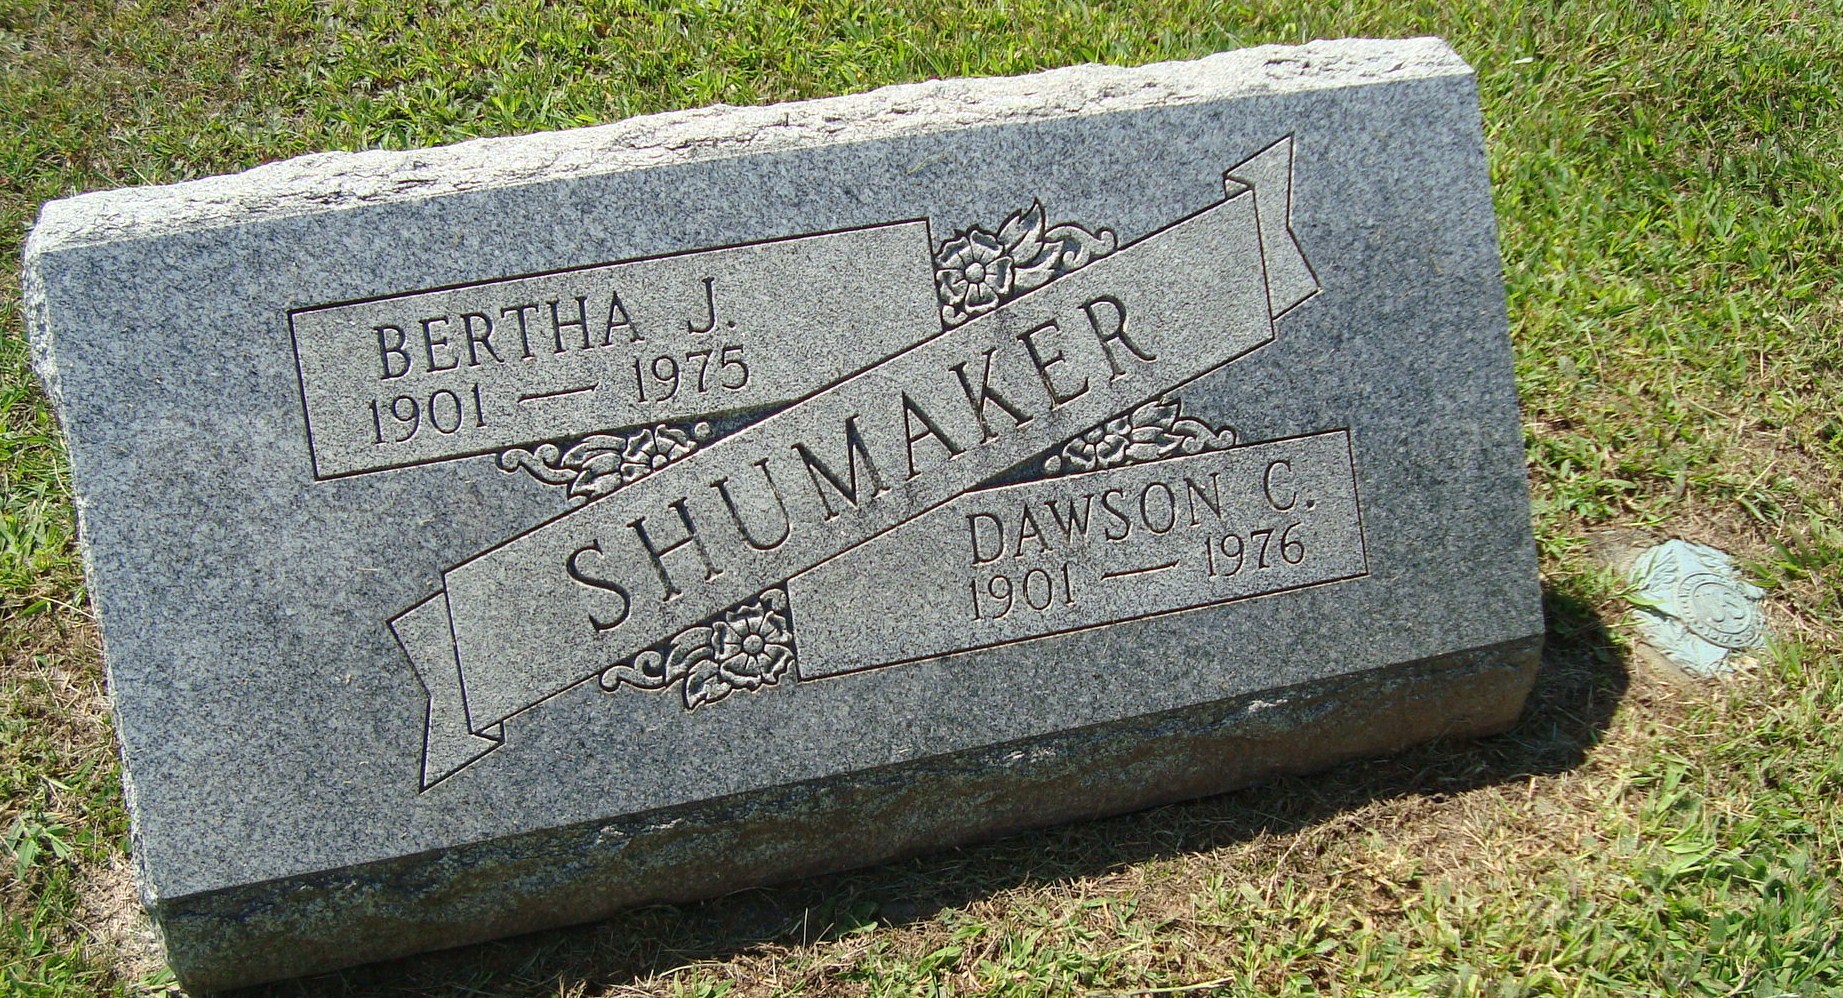  Dawson C. SHUMAKER